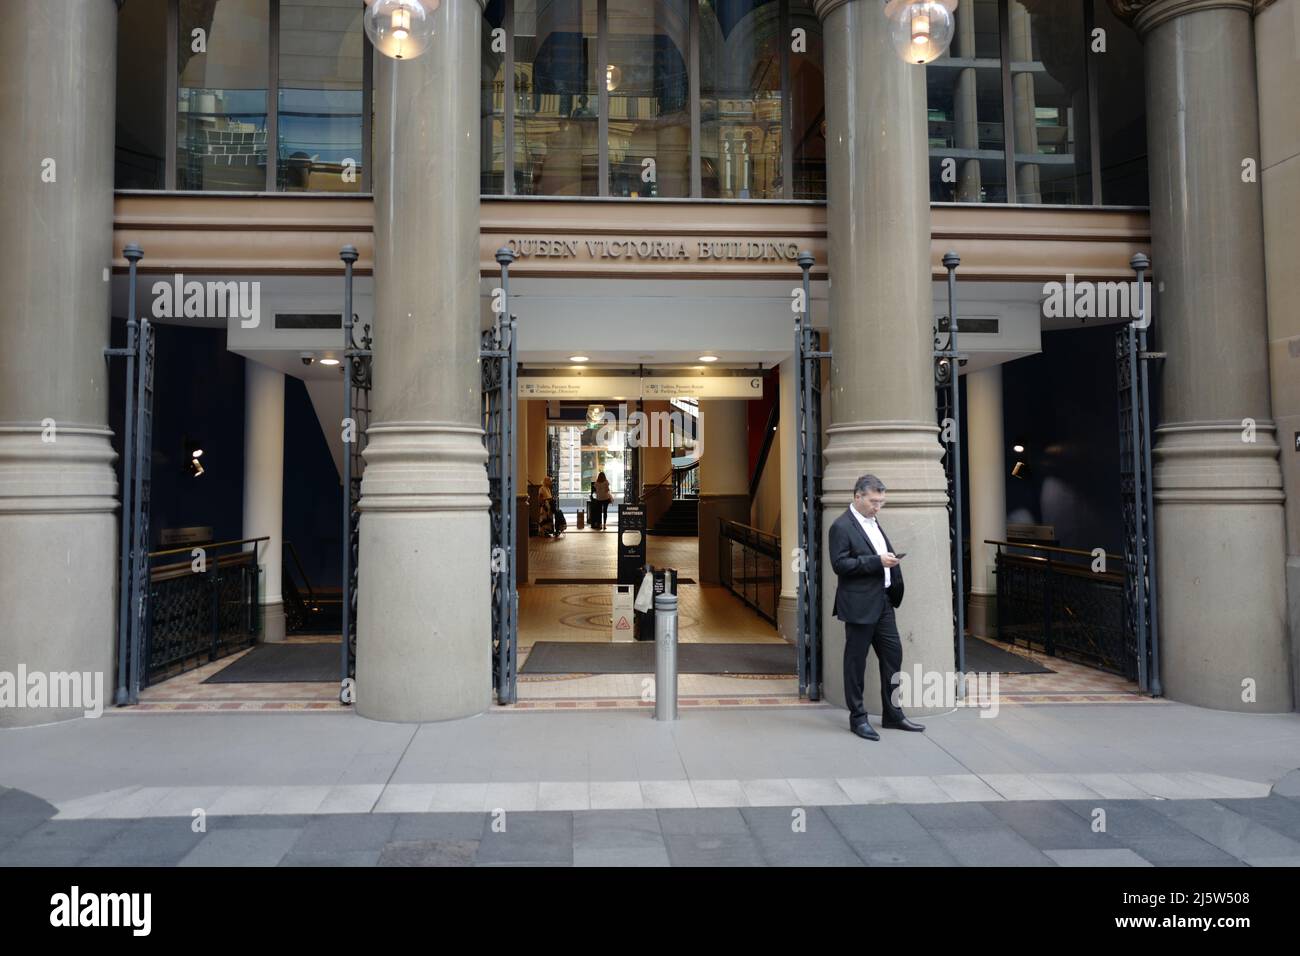 Entrance to Queen Victoria Building in Sydney Stock Photo